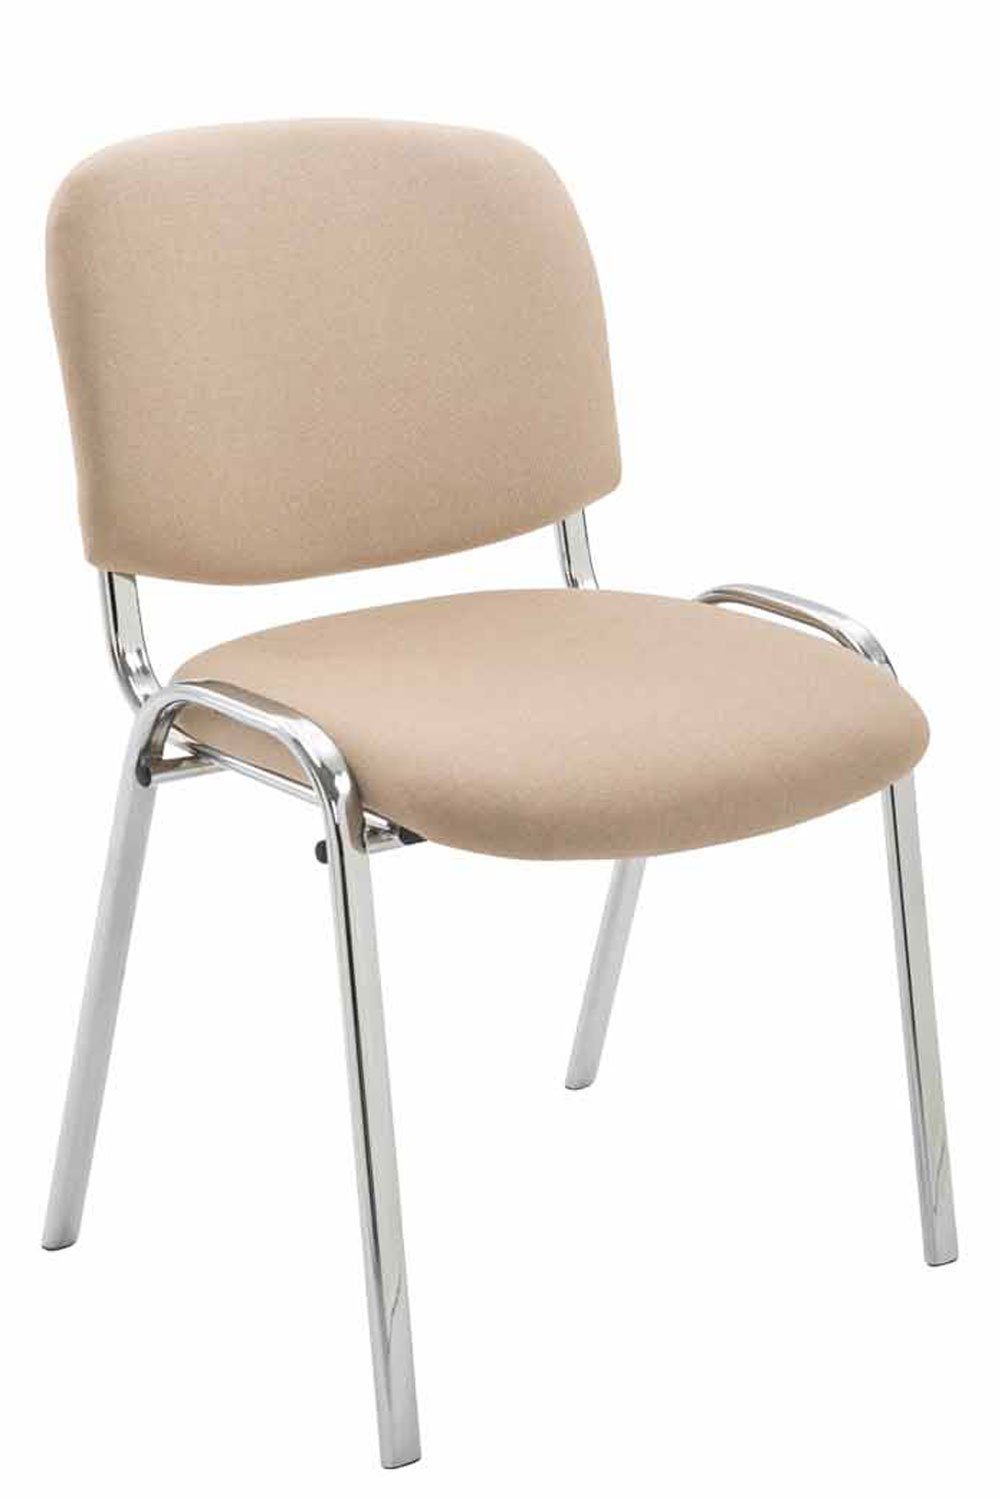 TPFLiving Besucherstuhl Keen Sitzfläche: creme - (Besprechungsstuhl mit Polsterung - Gestell: hochwertiger Warteraumstuhl Stoff Metall - chrom Messestuhl), - Konferenzstuhl